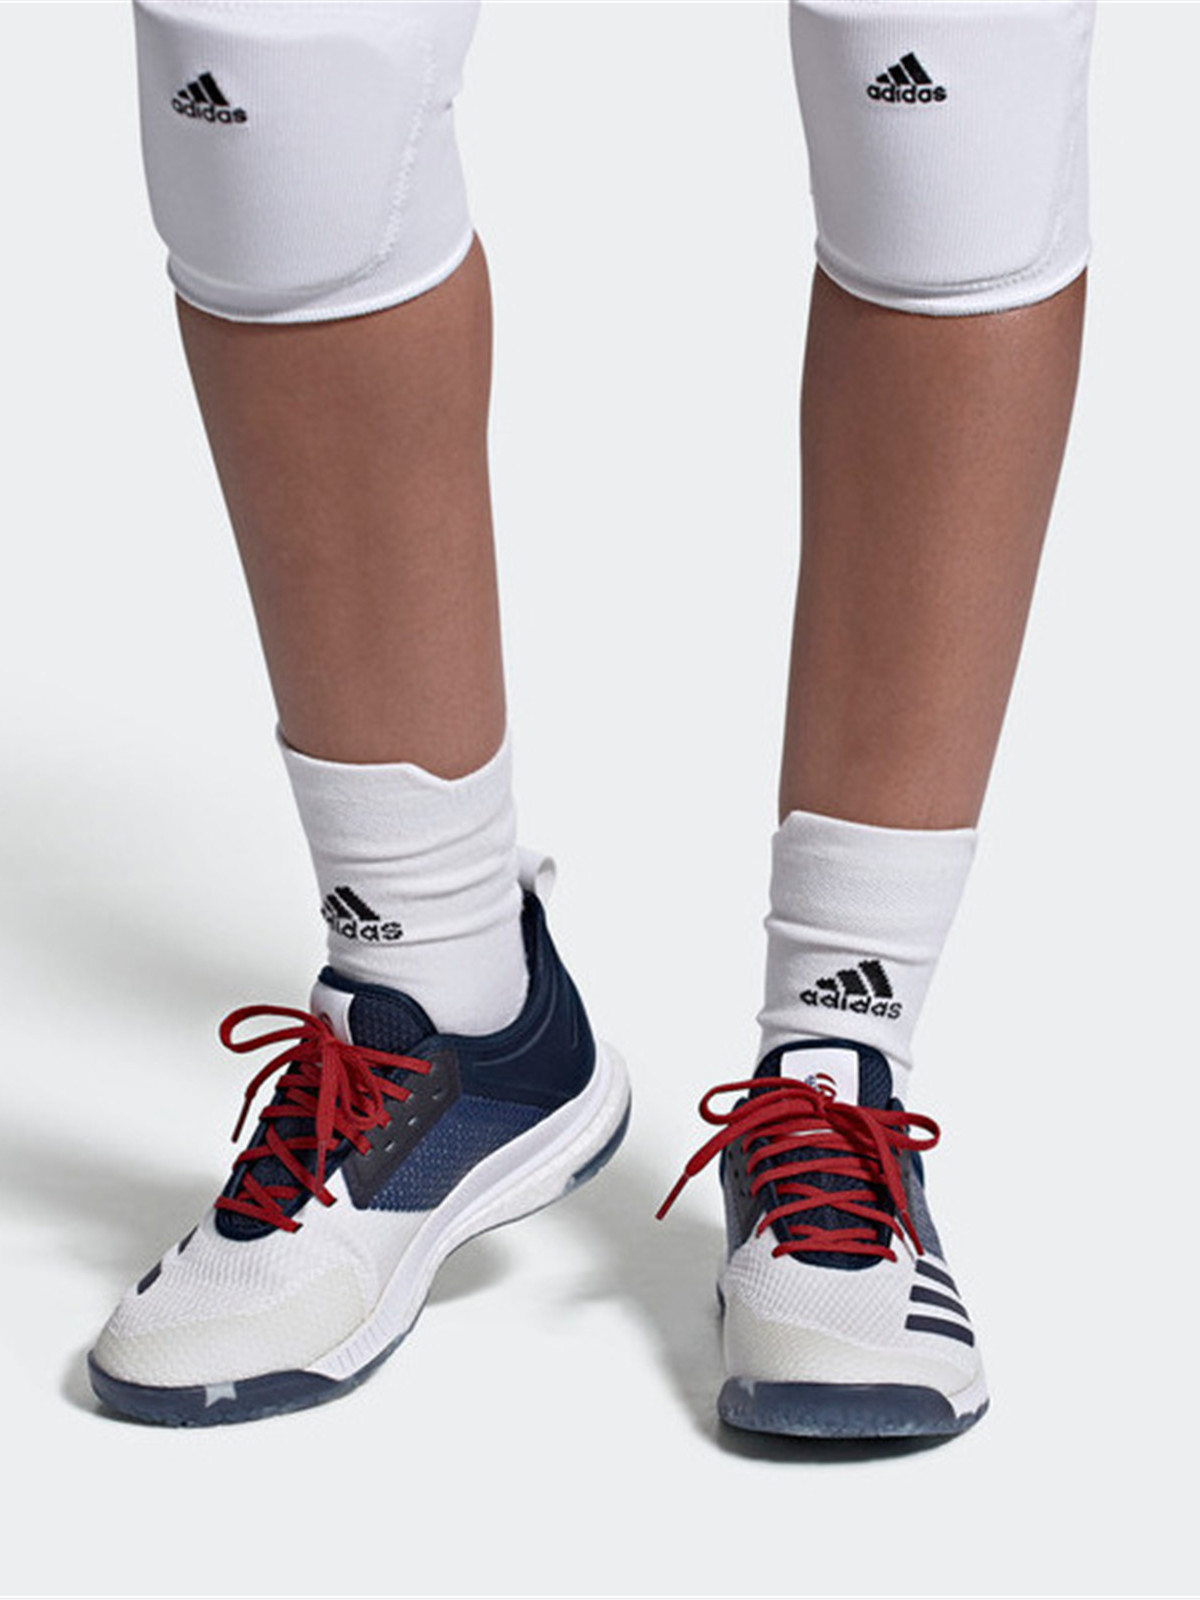 Adidas潮流排球鞋